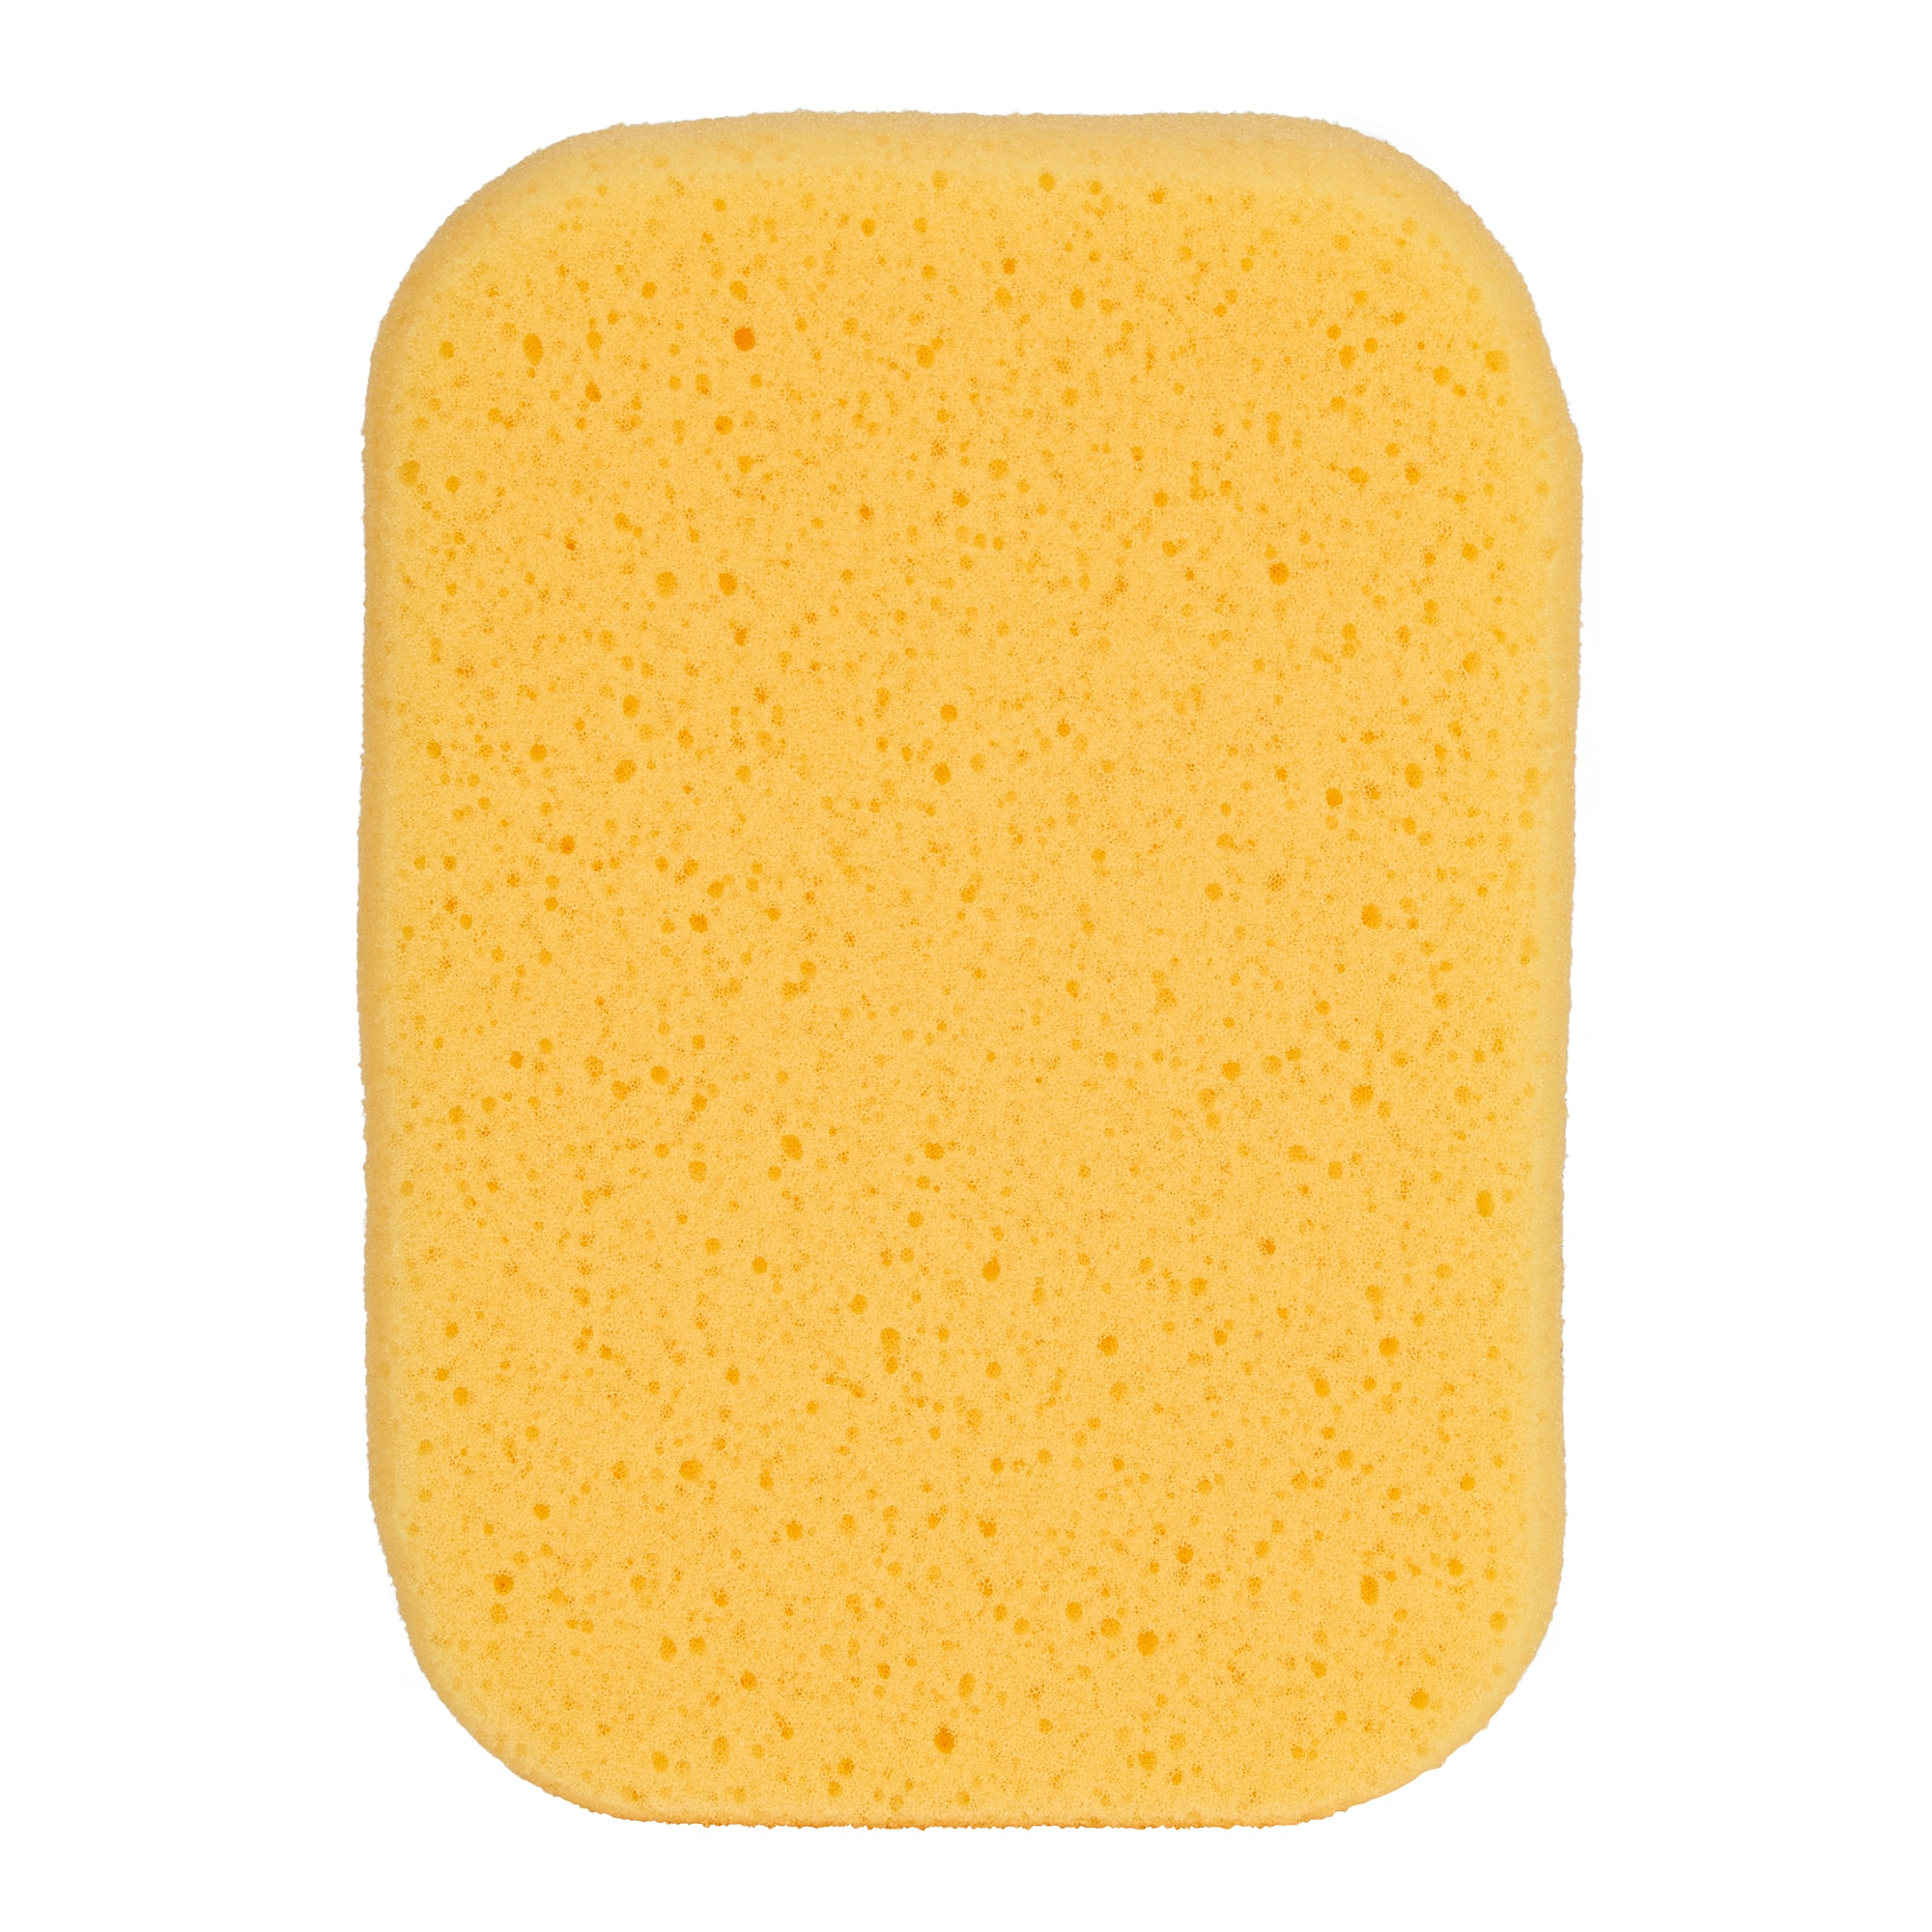 SPONDUCT Grout Sponge Tile Grouting Super Sponge,Oval Grout Sponge